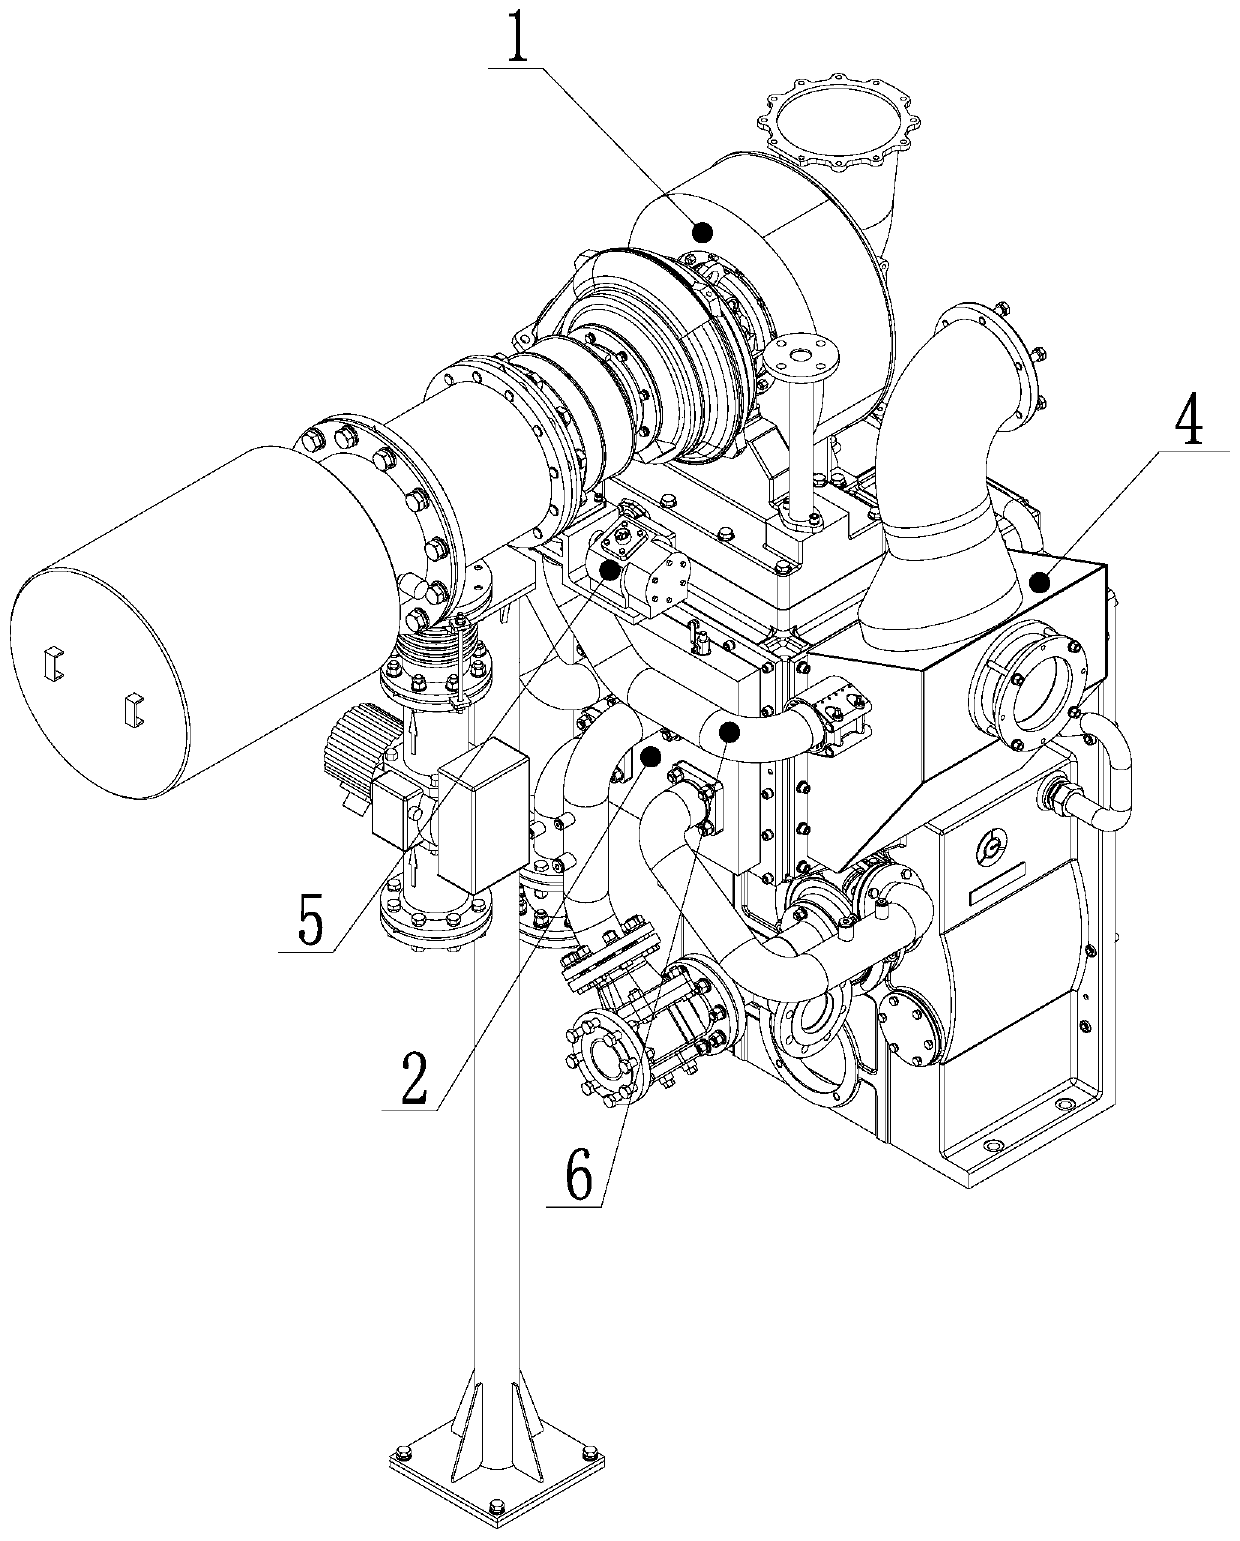 Power control mechanism of gas engine